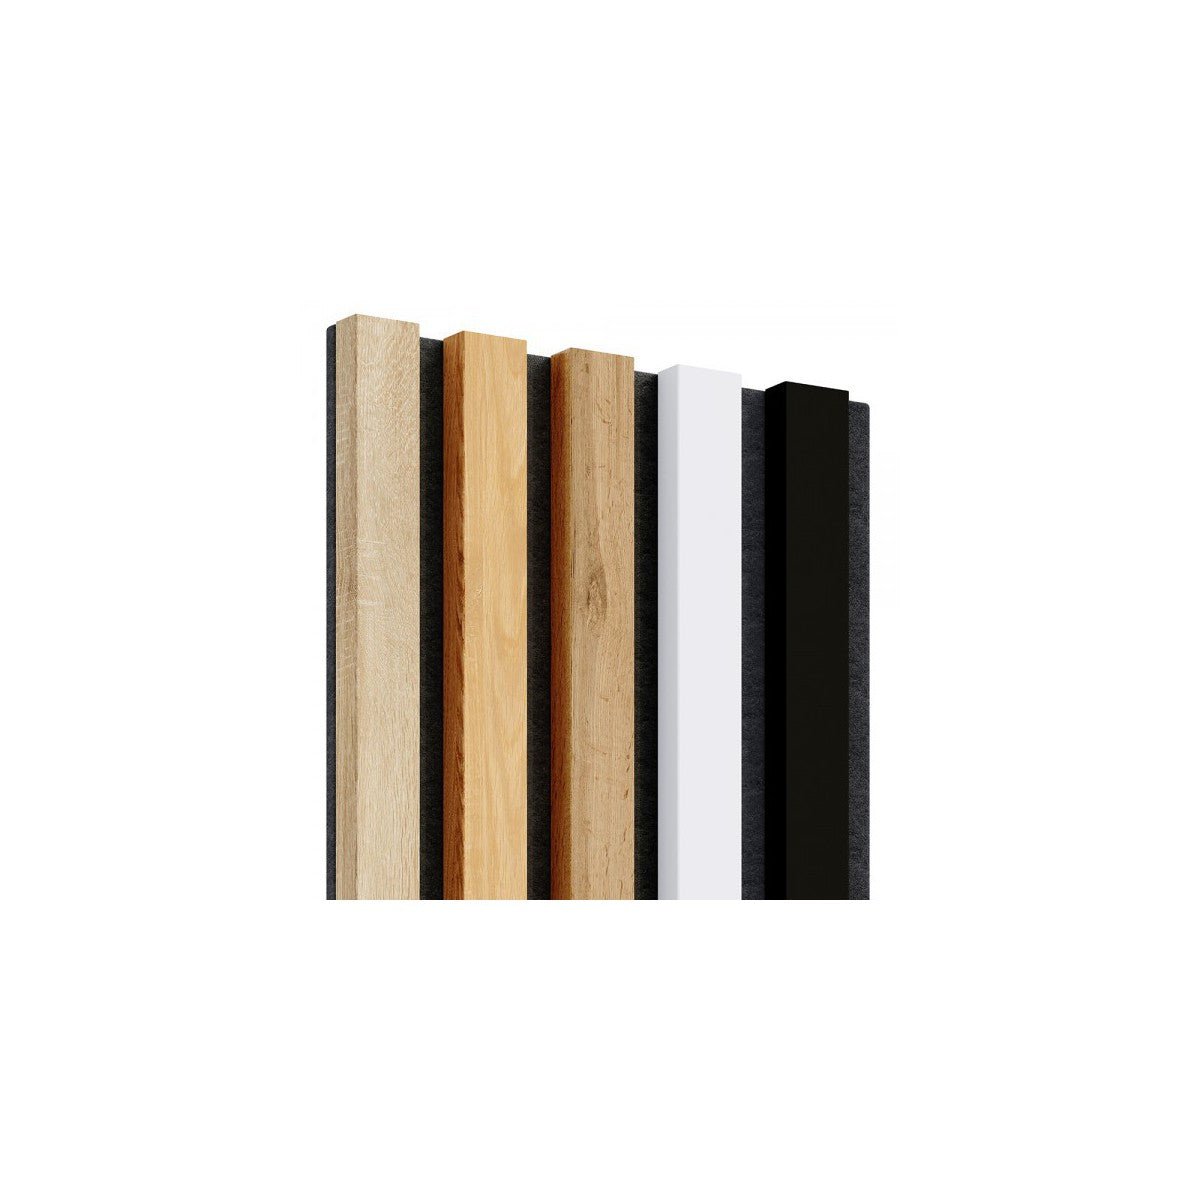 Acoustic slats sample box - DecorMania.eu